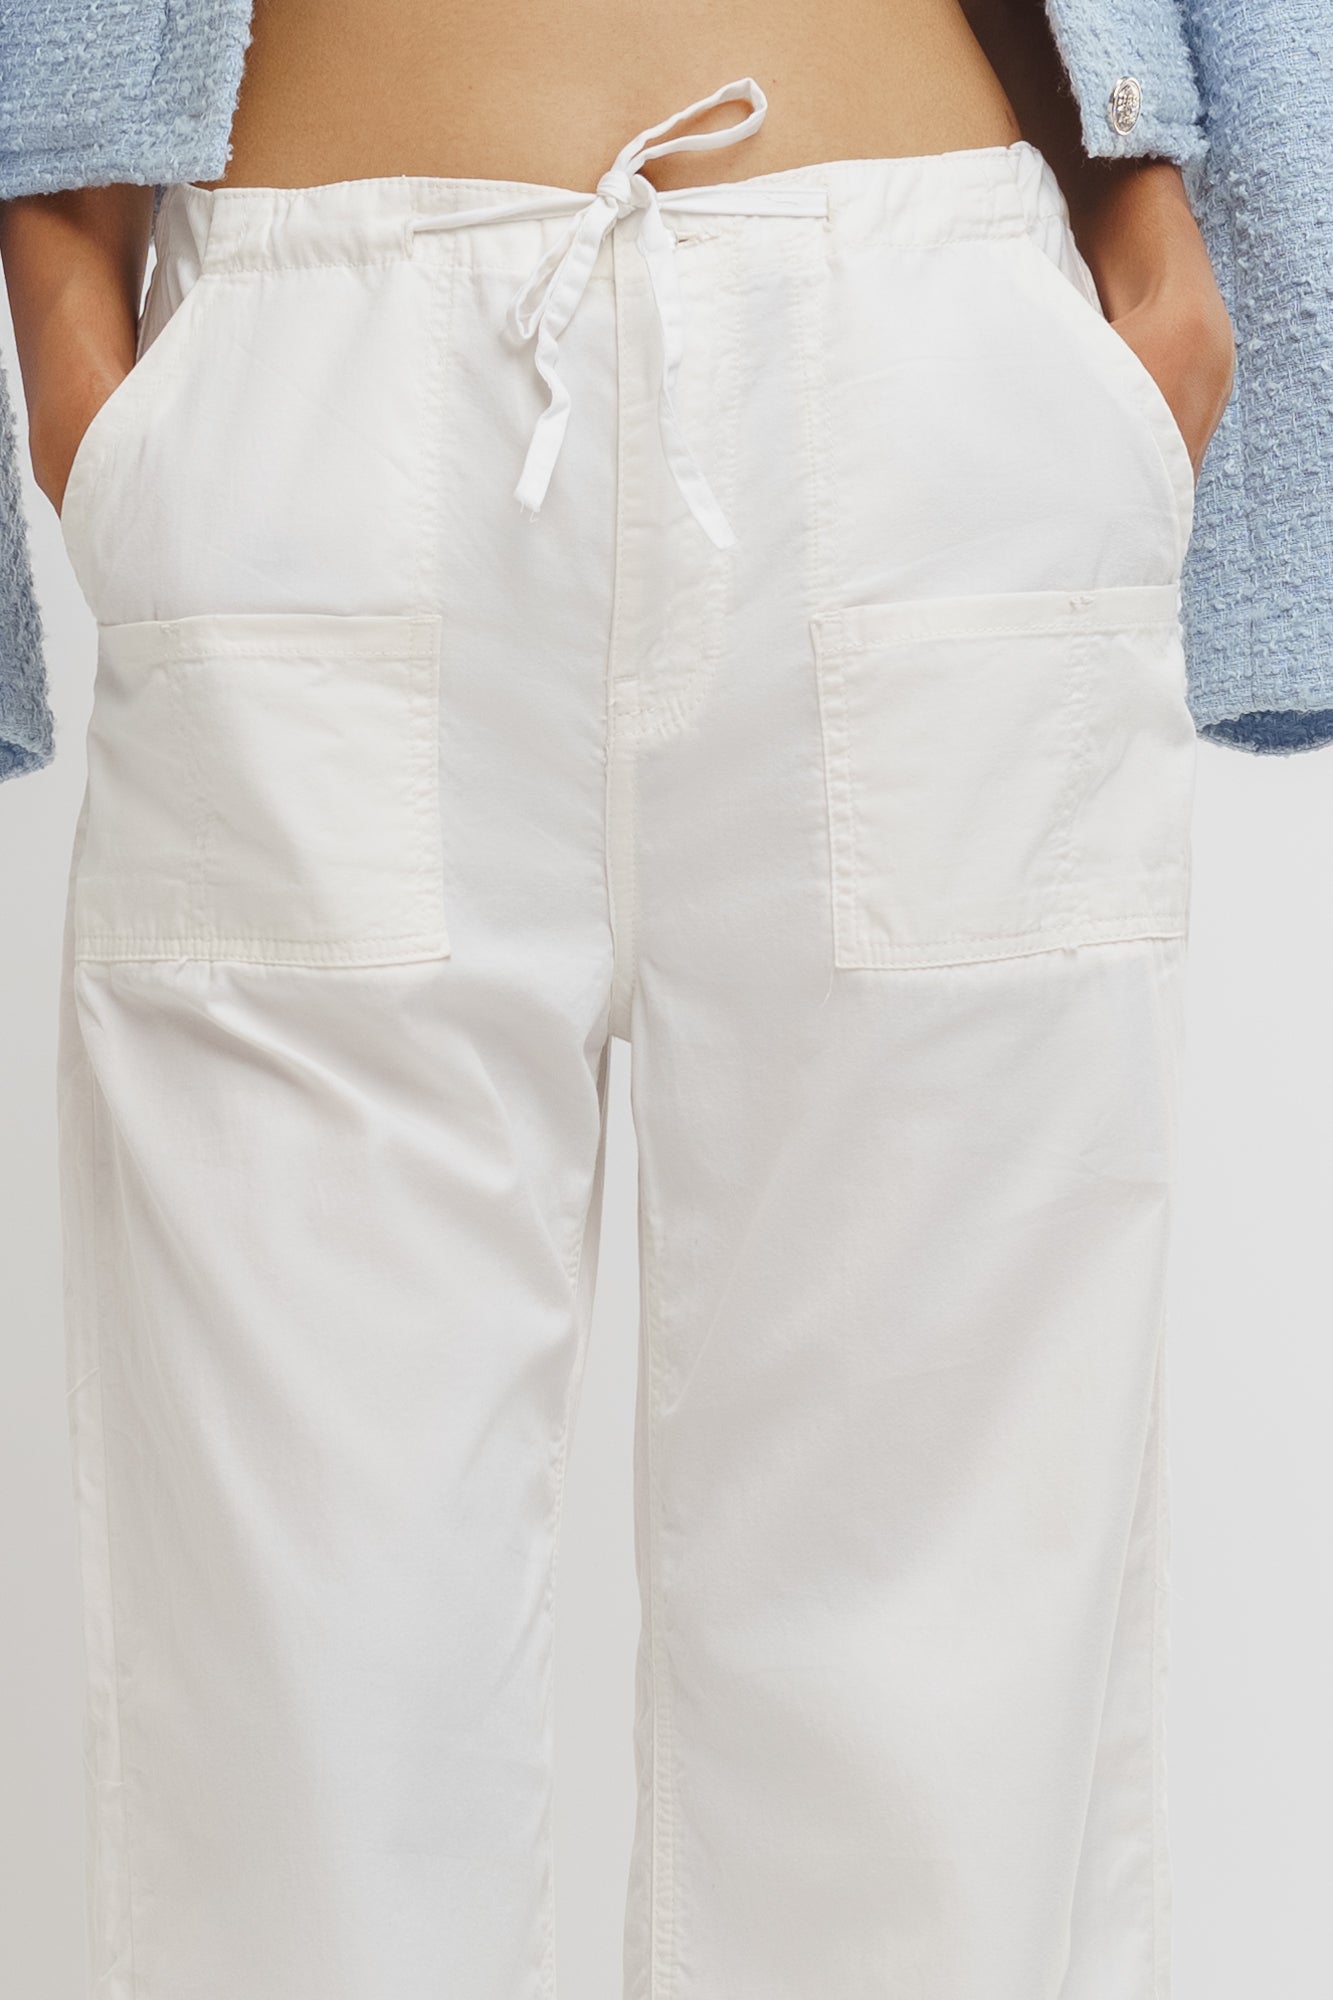 Fragarn Womens Summer Print Casual Loose Pants Plus Size Loose